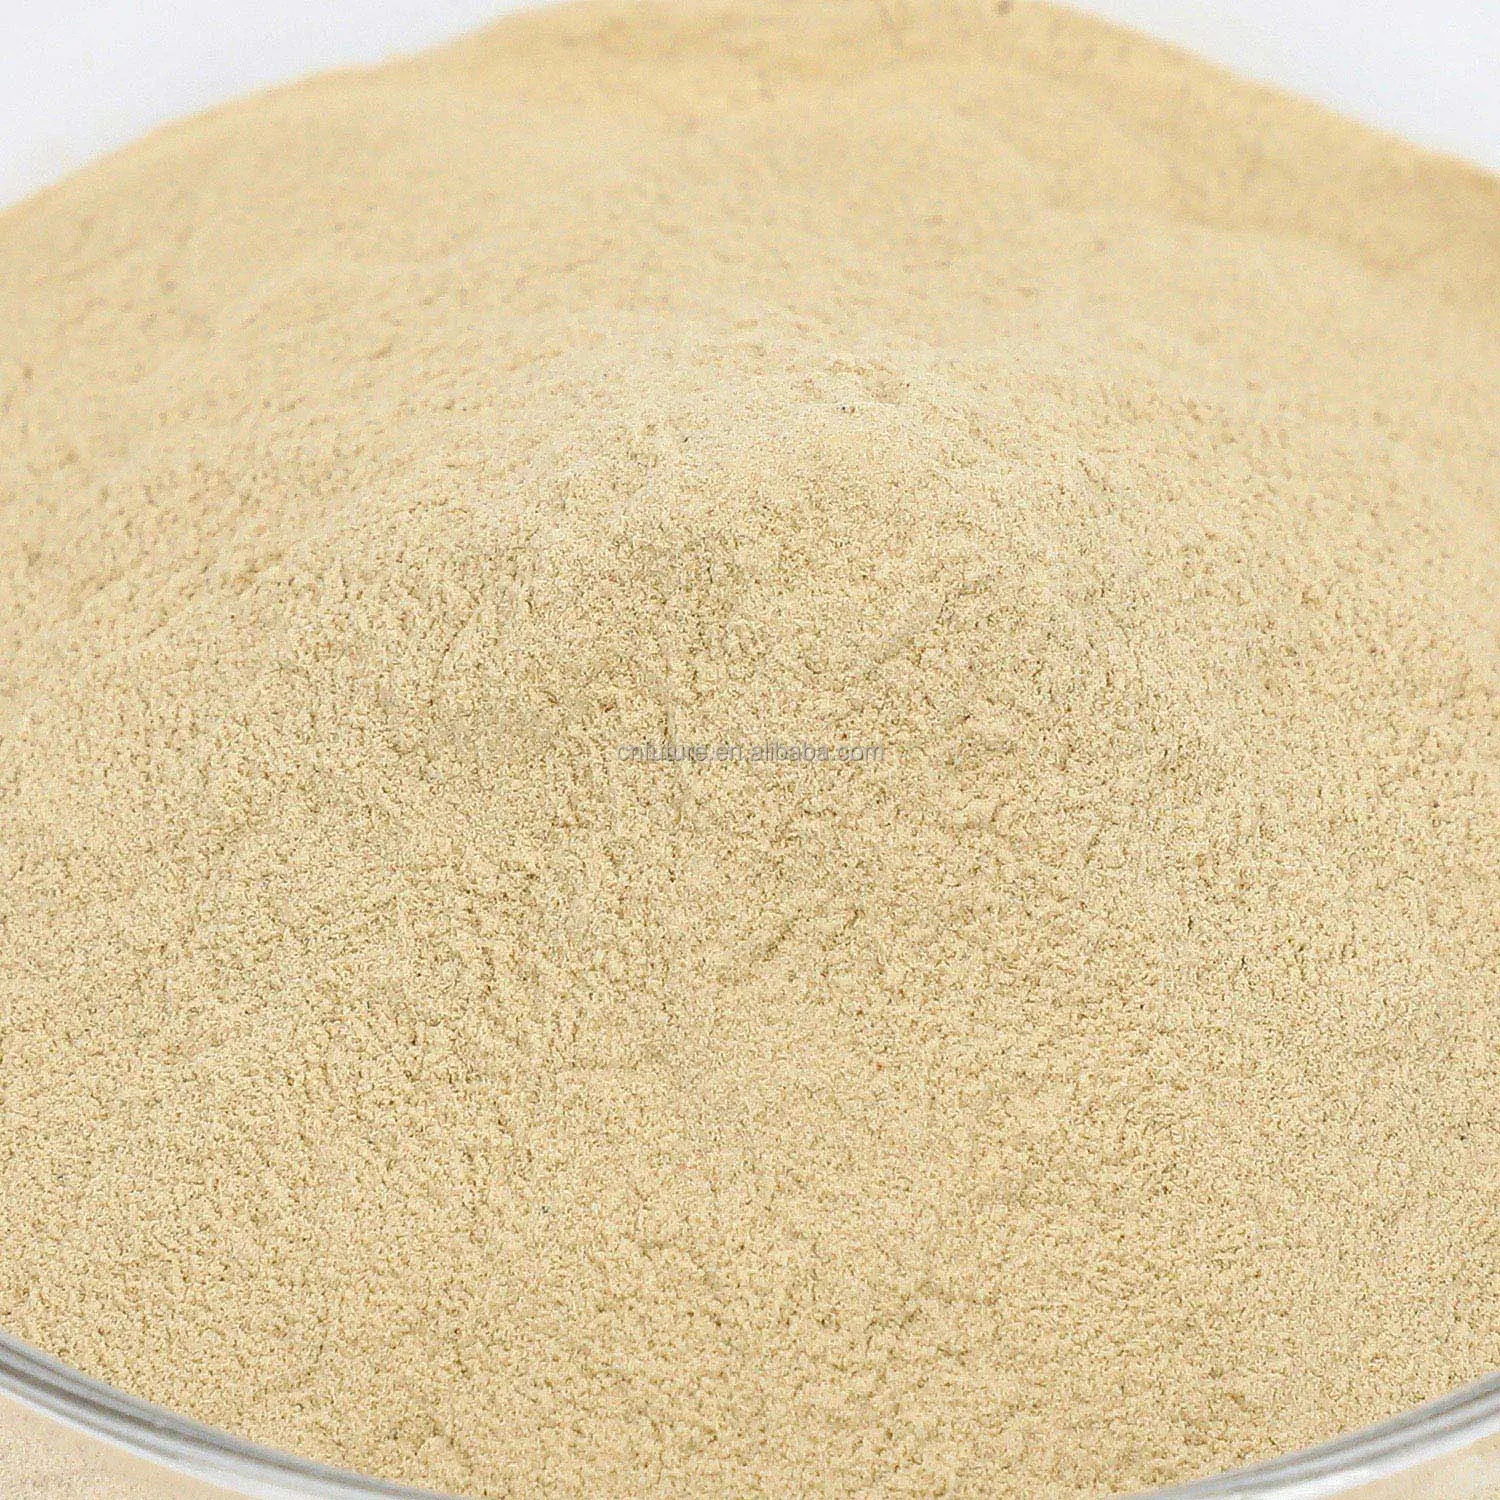 factory direct sell amino acid powder 40%-80% organic nitrogen fertilizer